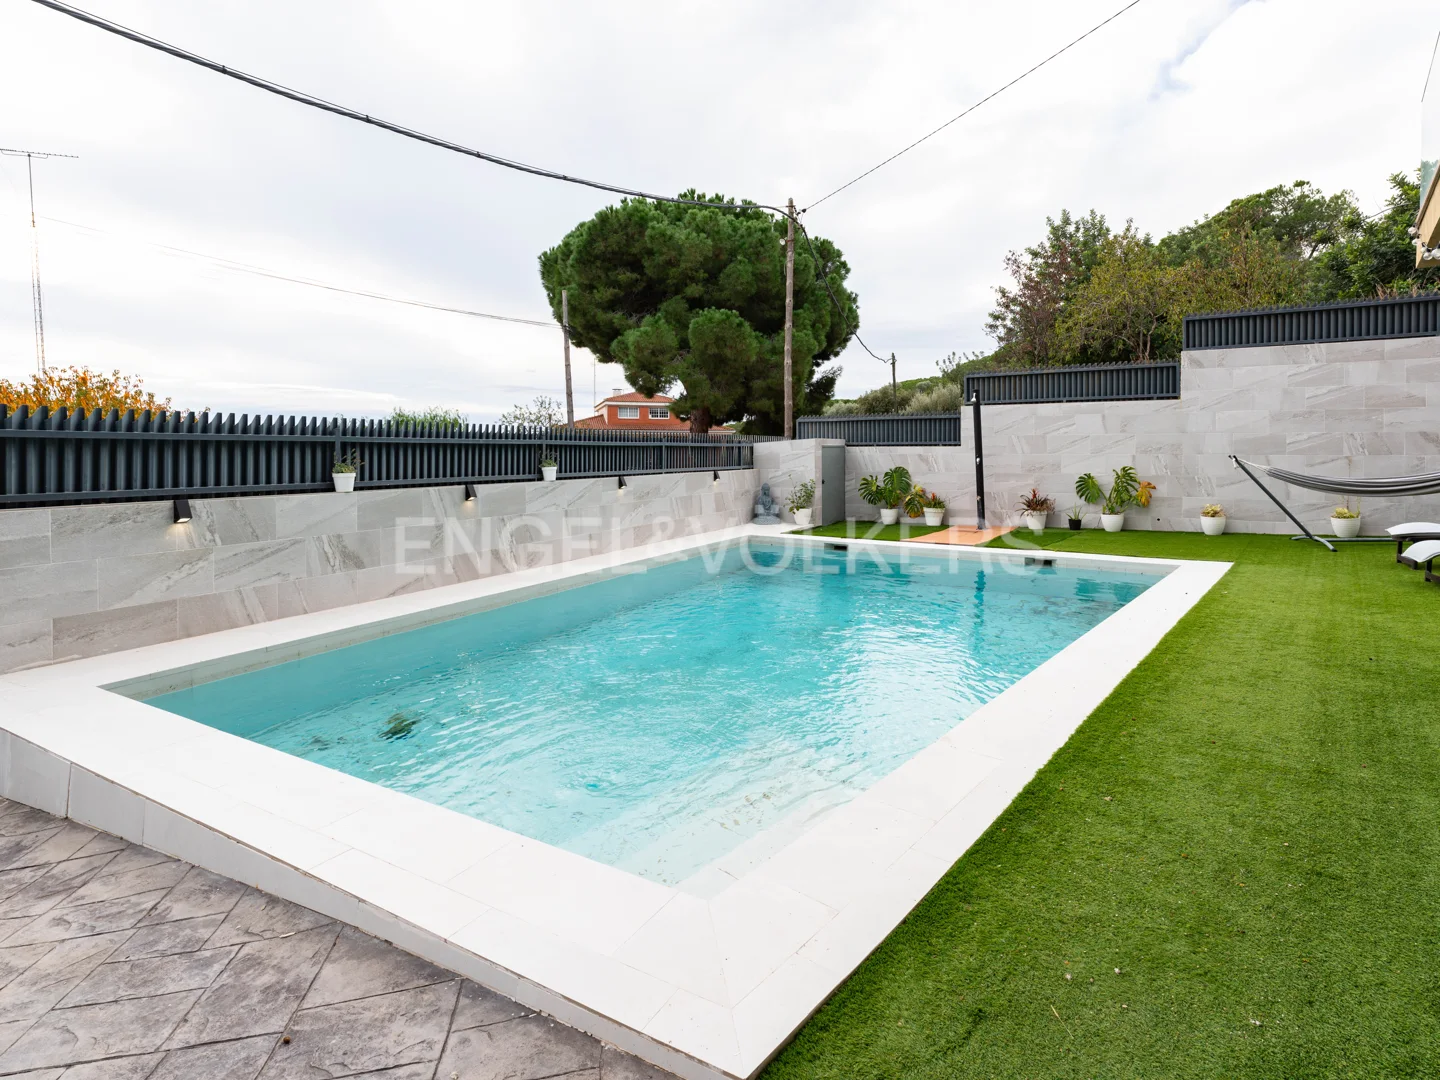 Espectacular casa unifamiliar con piscina